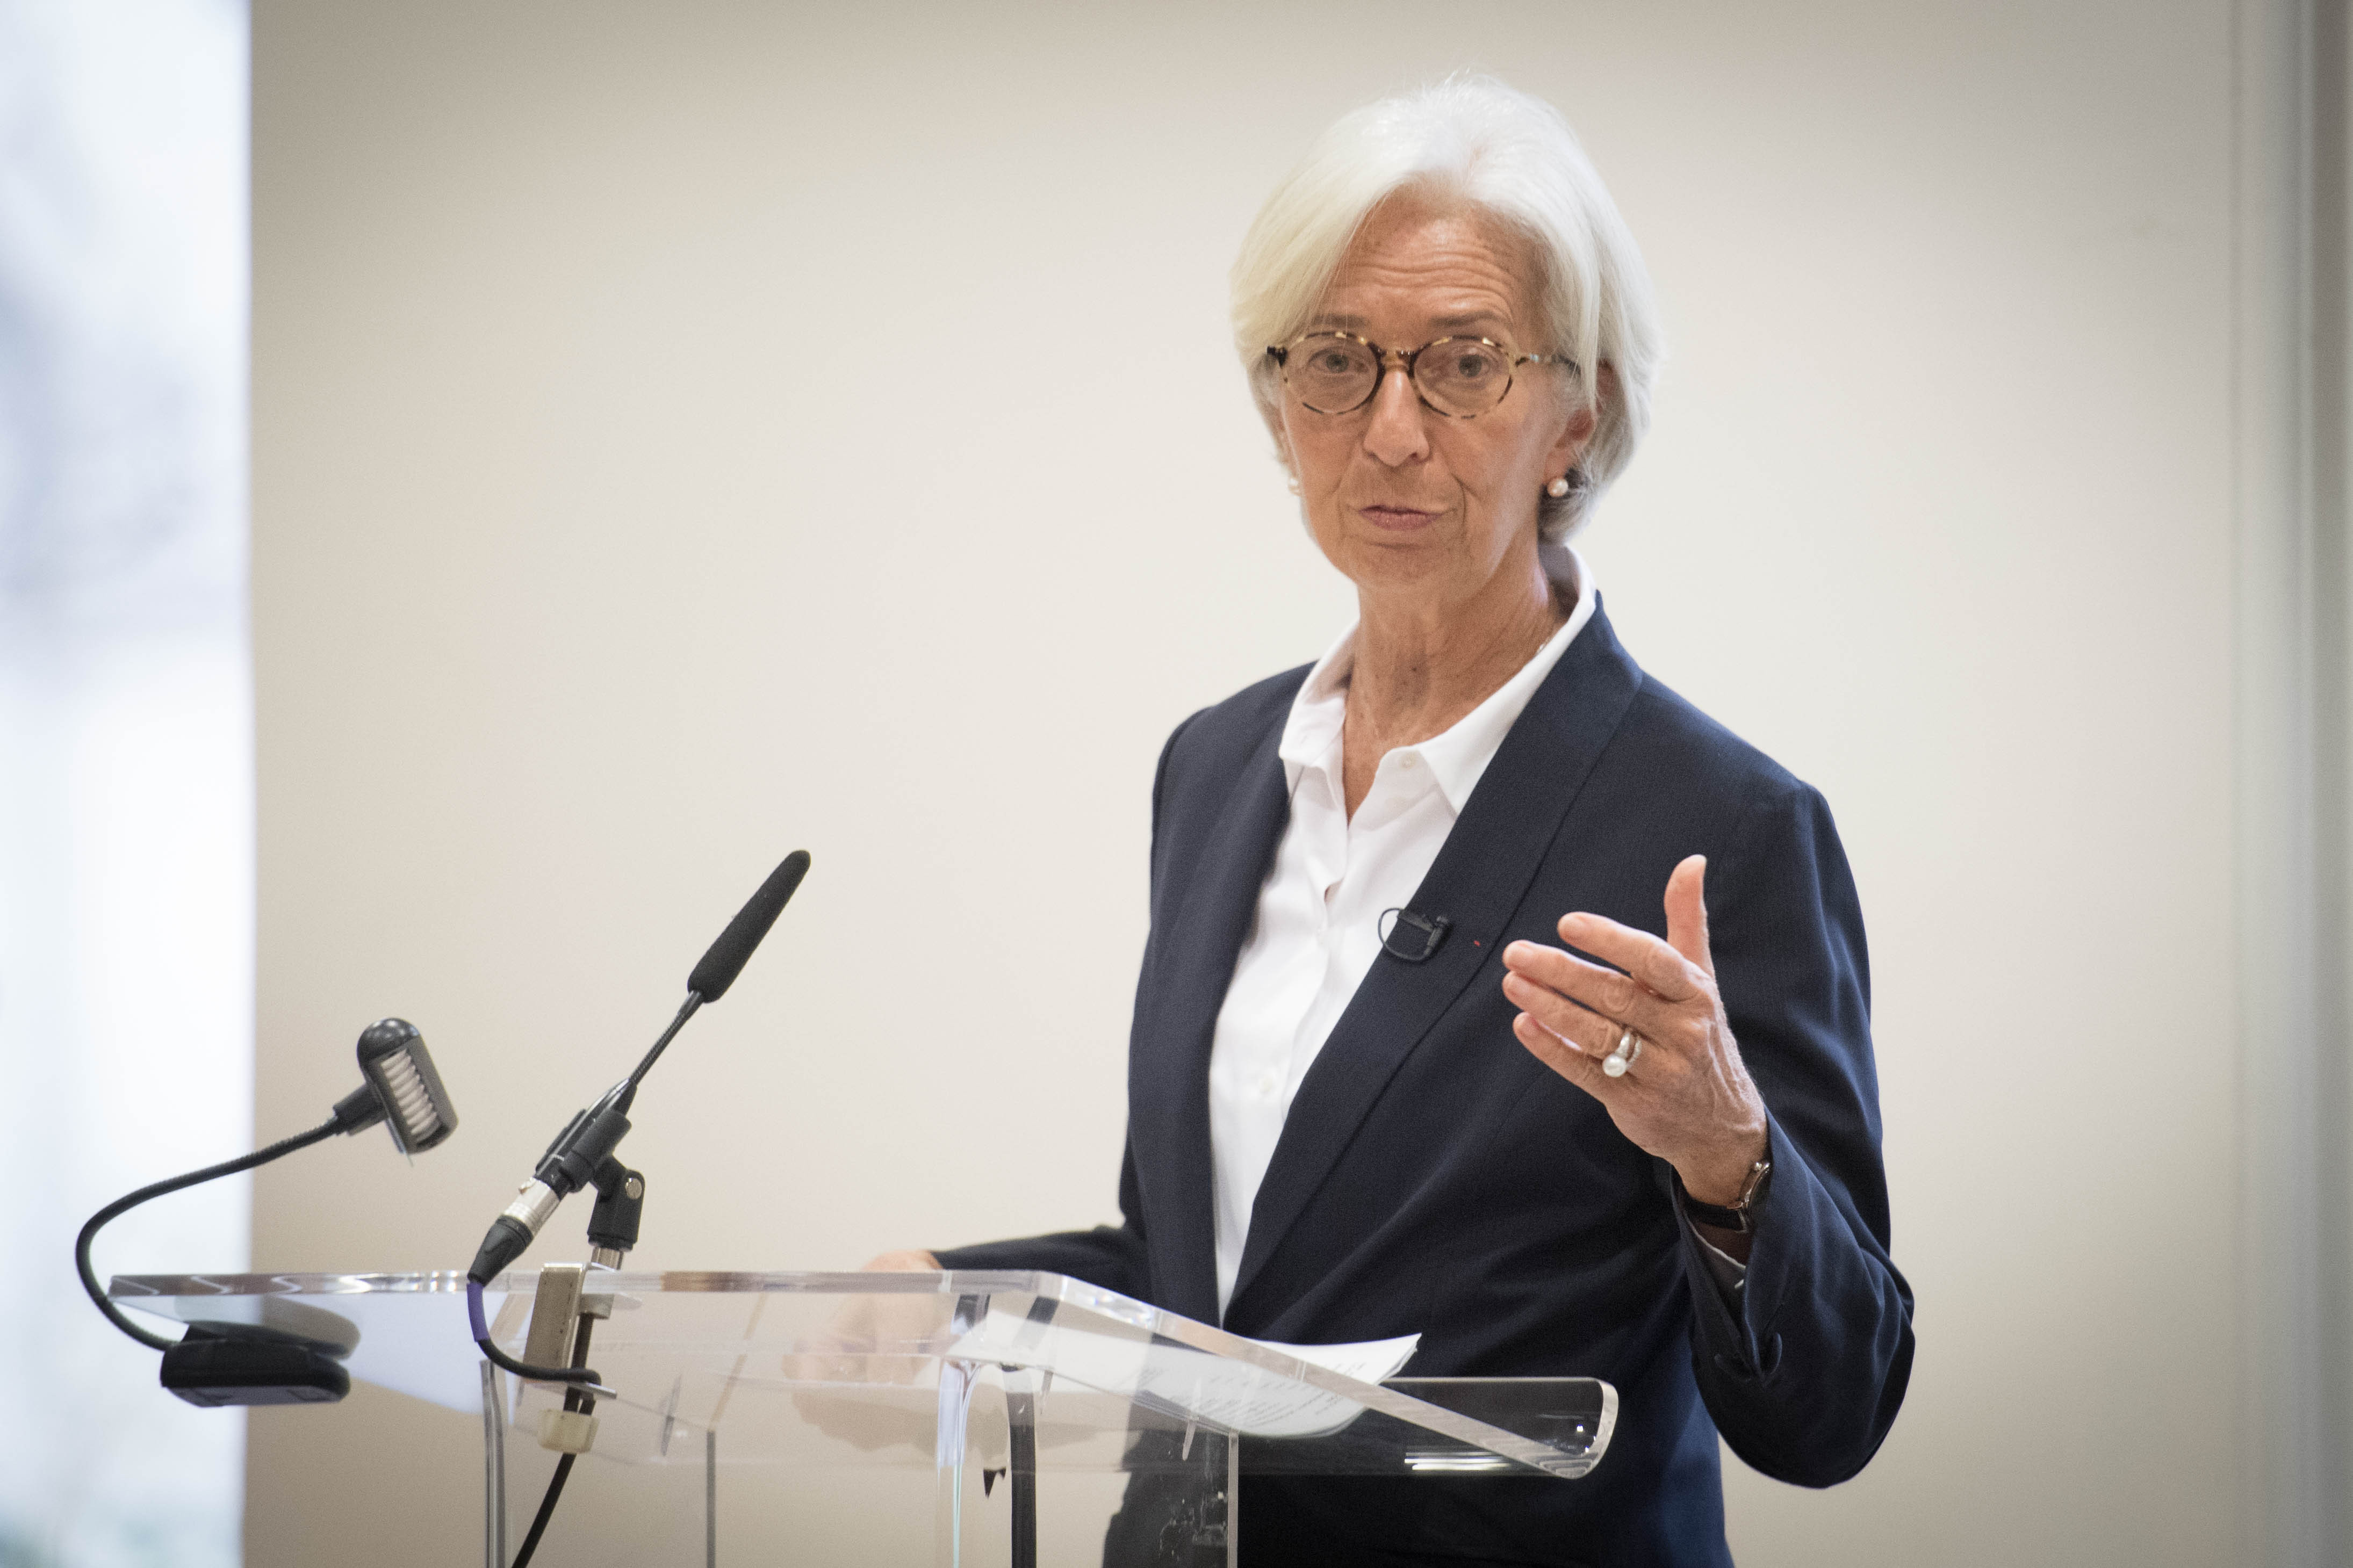 IMF chief Christine Lagarde.